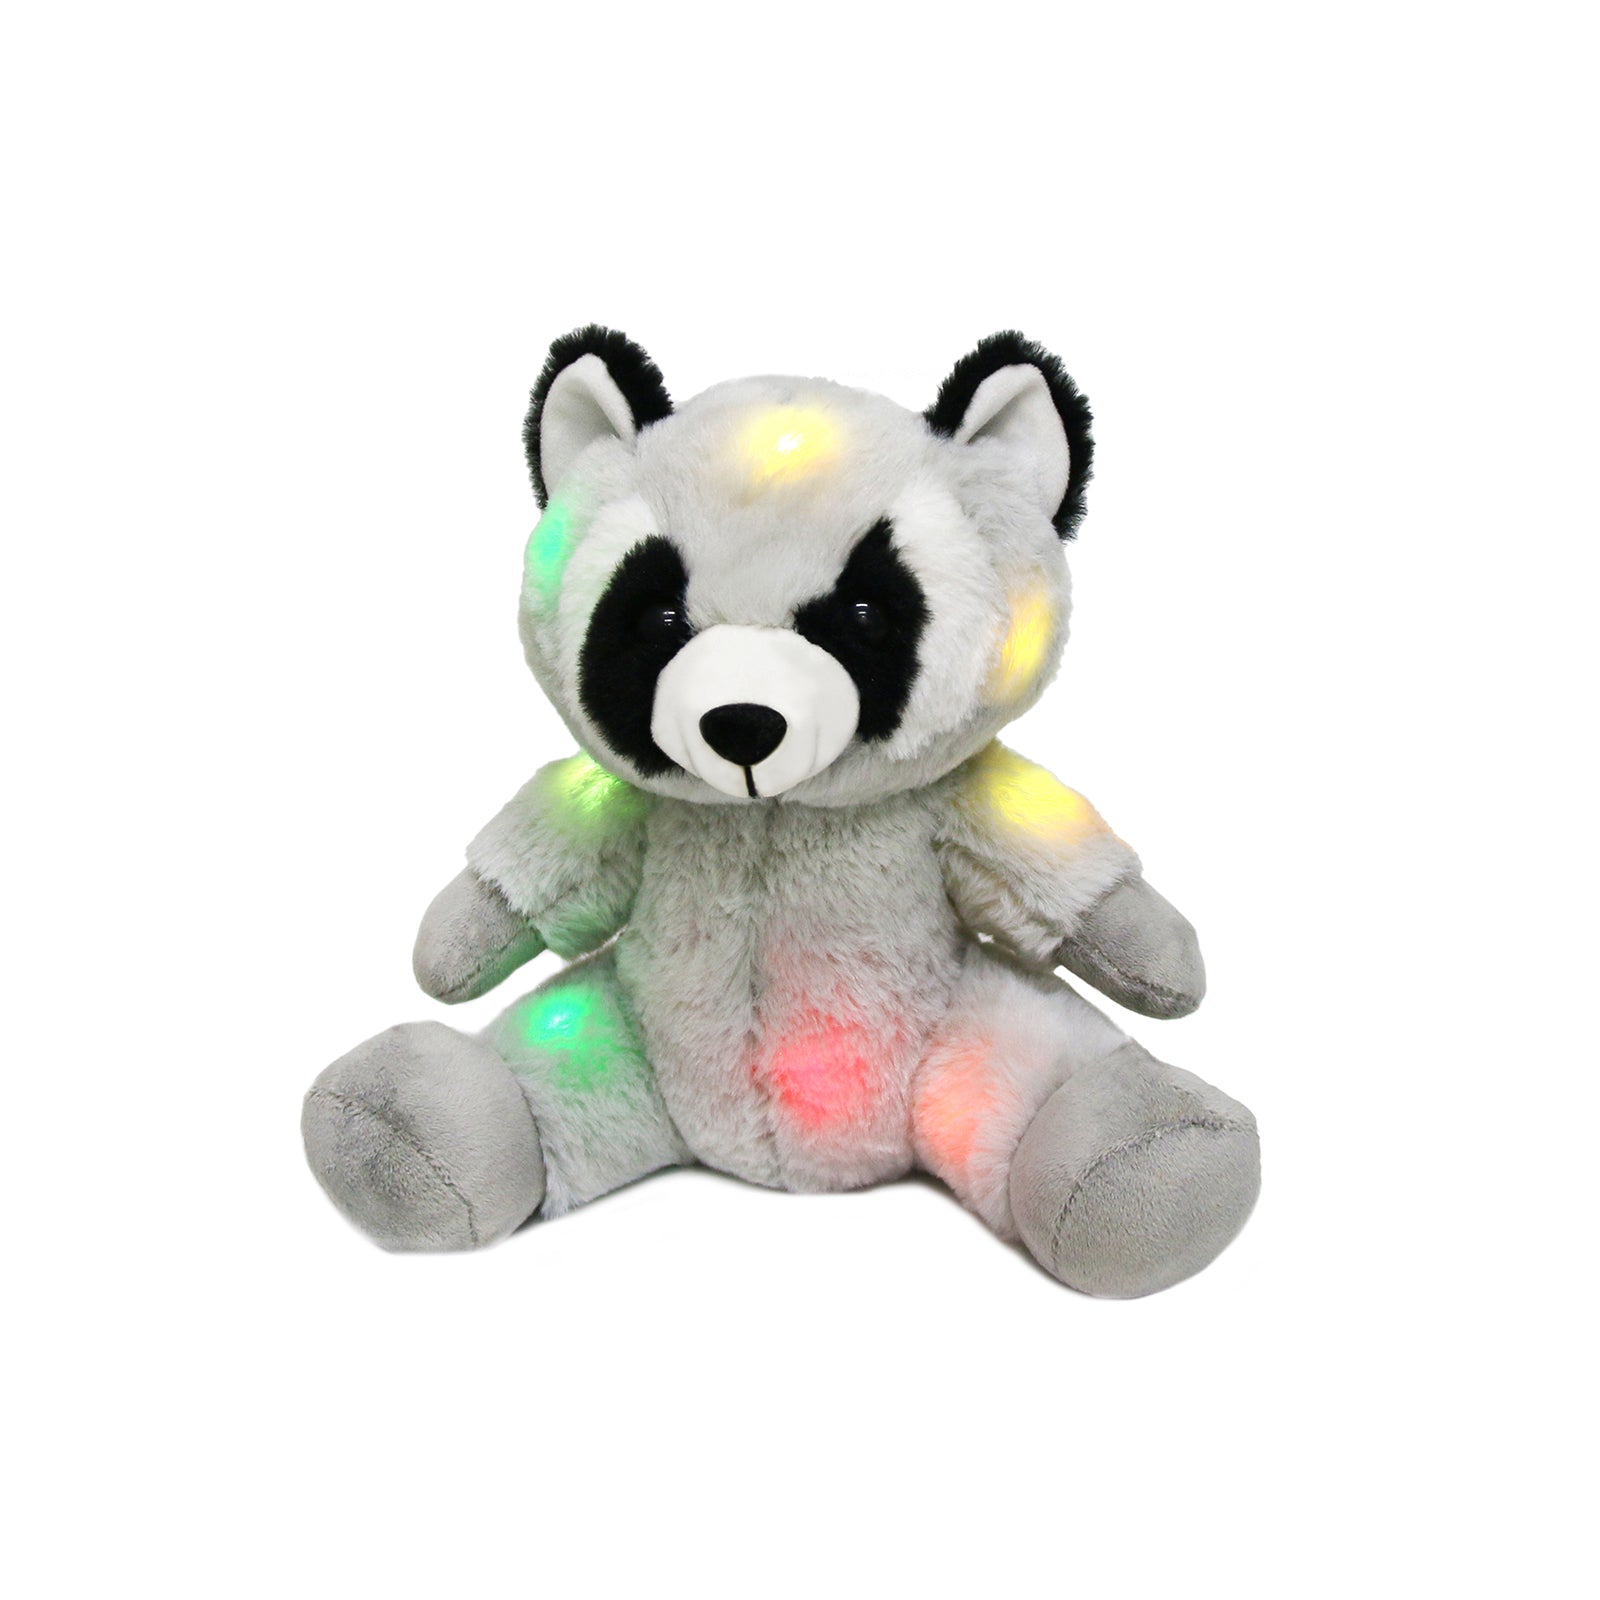 Bstaofy LED Raccoon Stuffed Animal Glow Soft Plush Toy - Glow Guards